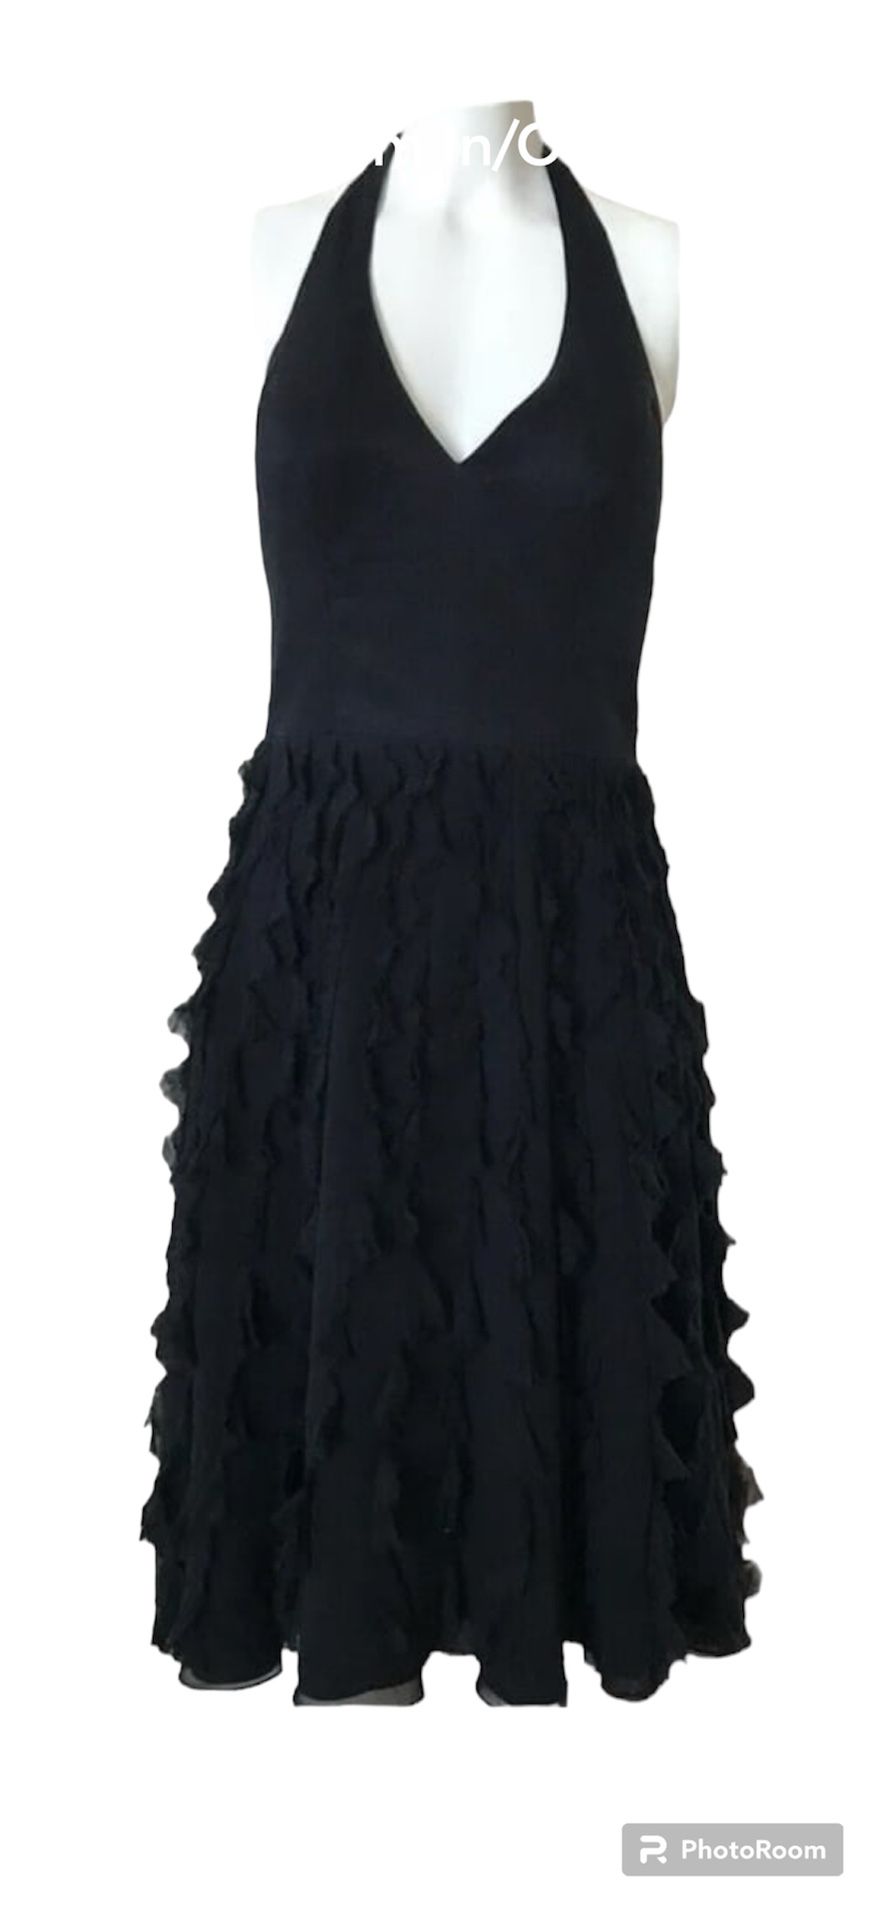 White House Black Market Elegant Black Halter Neck Dress with Tiered Ruffles 10